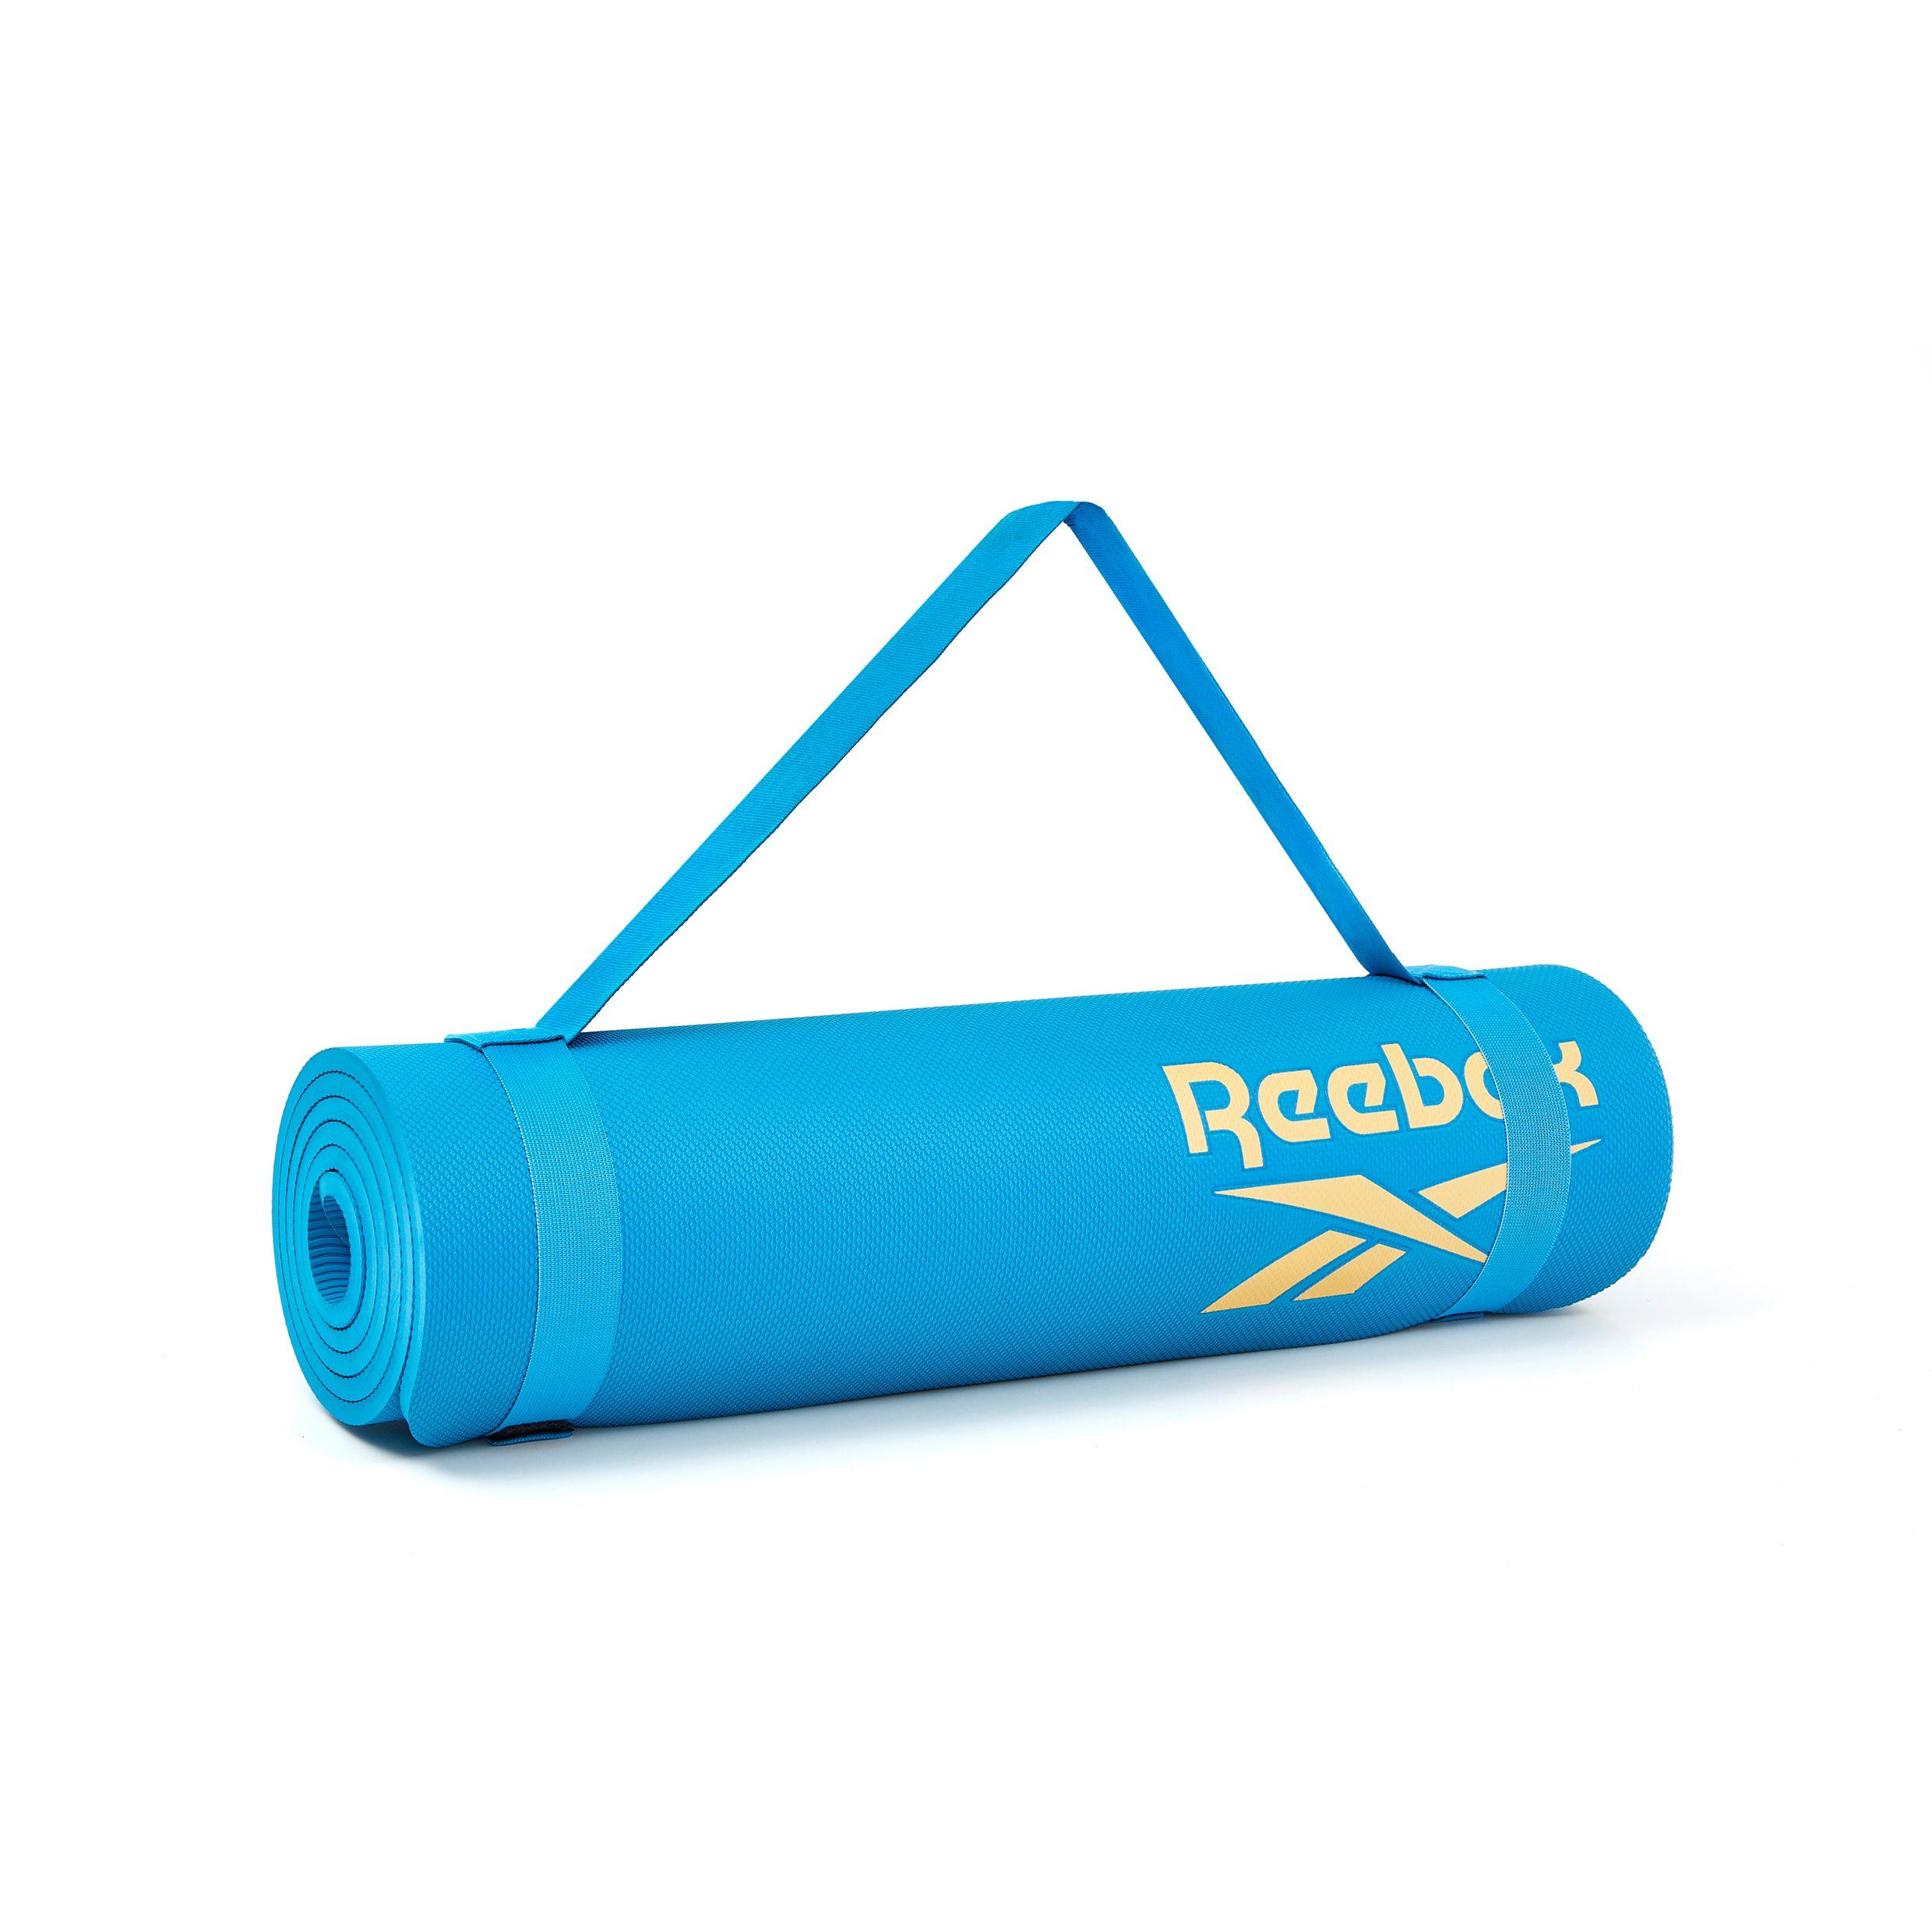 Reebok Blau, Fitnessmatte Reebok strapazierfähigem Material und Fitness-/Trainingsmatte rutschfestem 8mm, mit Performance,